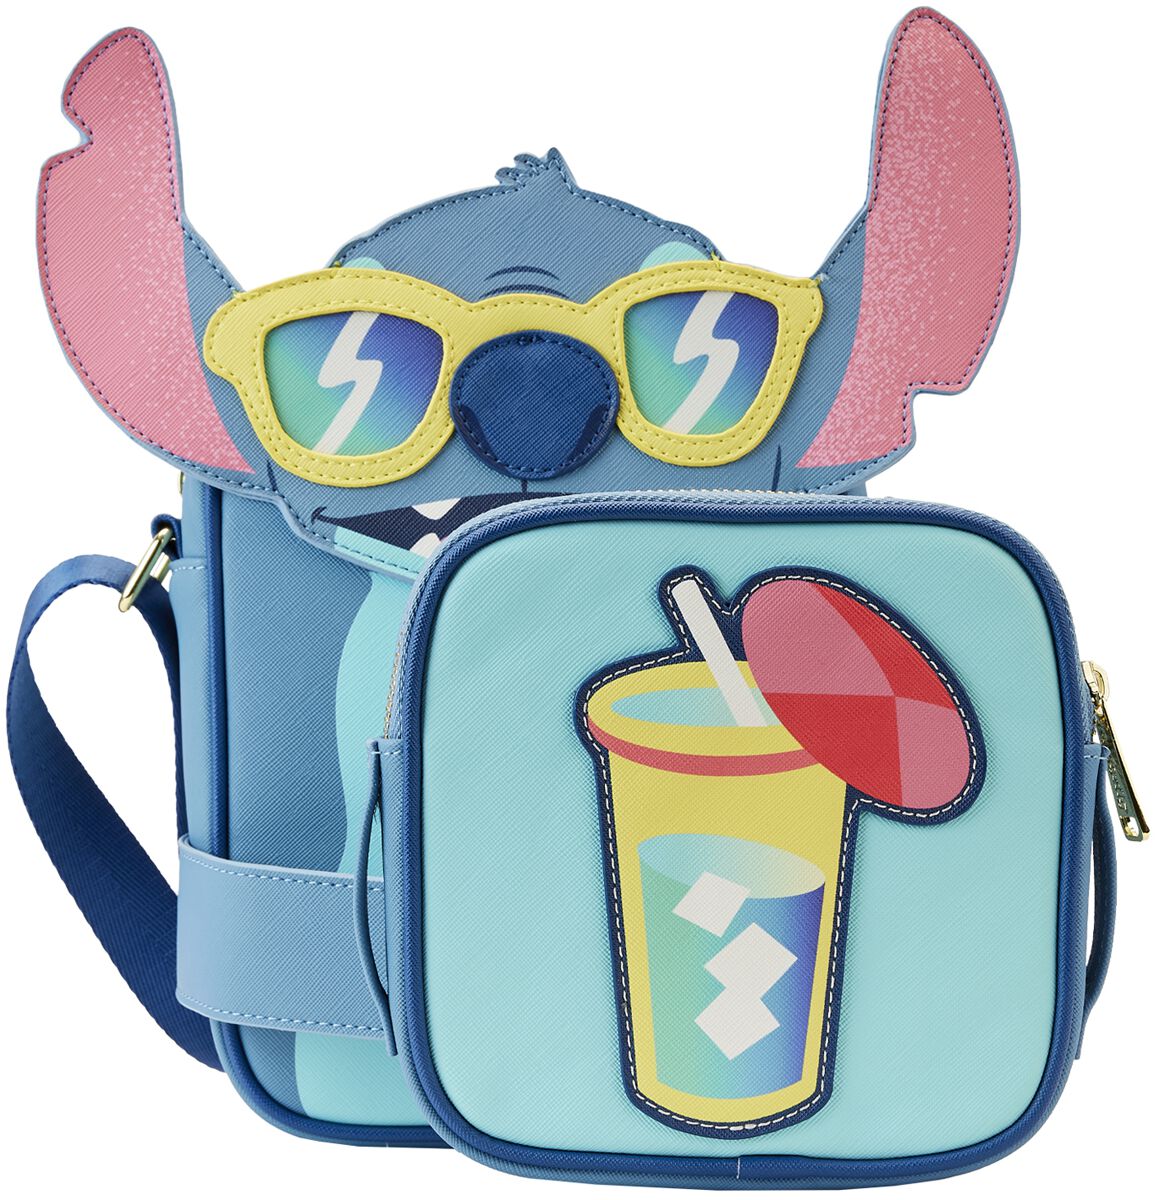 Stitch Plush Mini Backpack - Lilo & Stitch